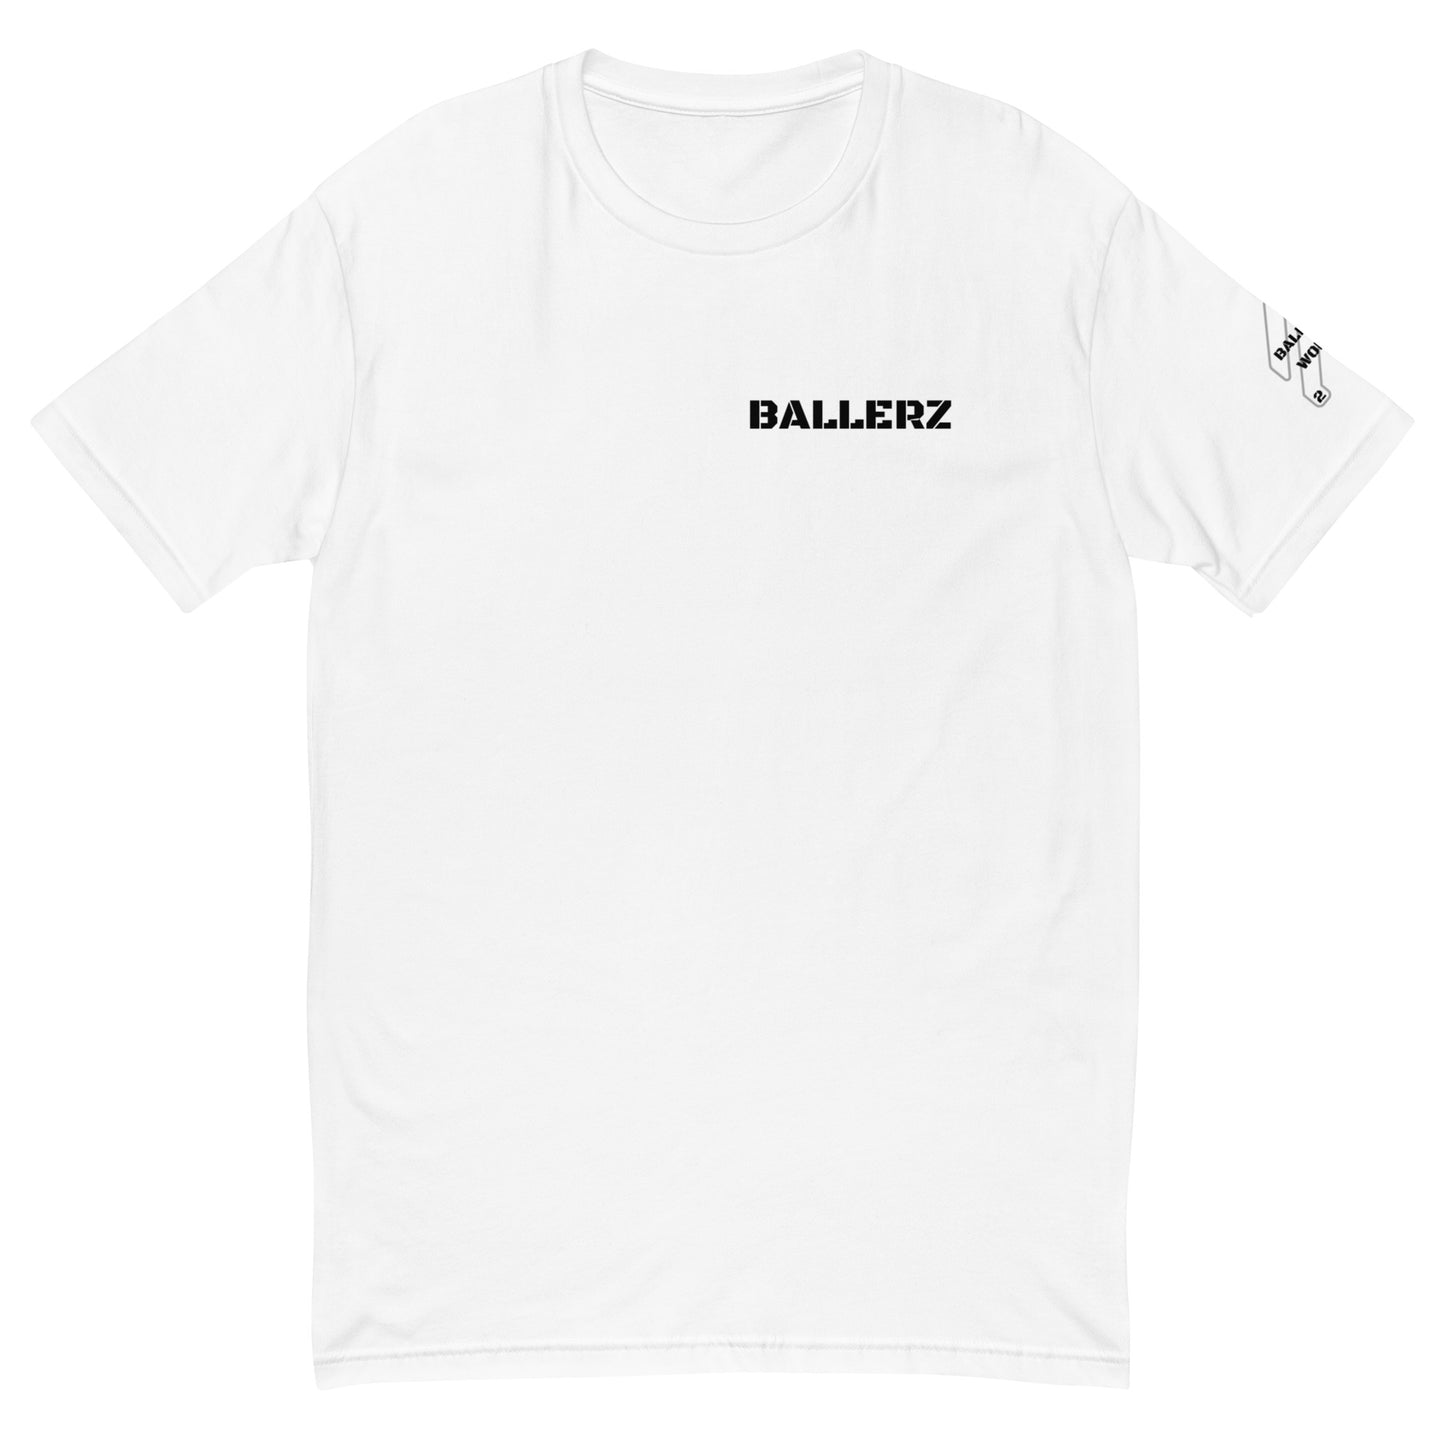 BALLERZWORLD EXCLUSIVE Short Sleeve T-shirt!!